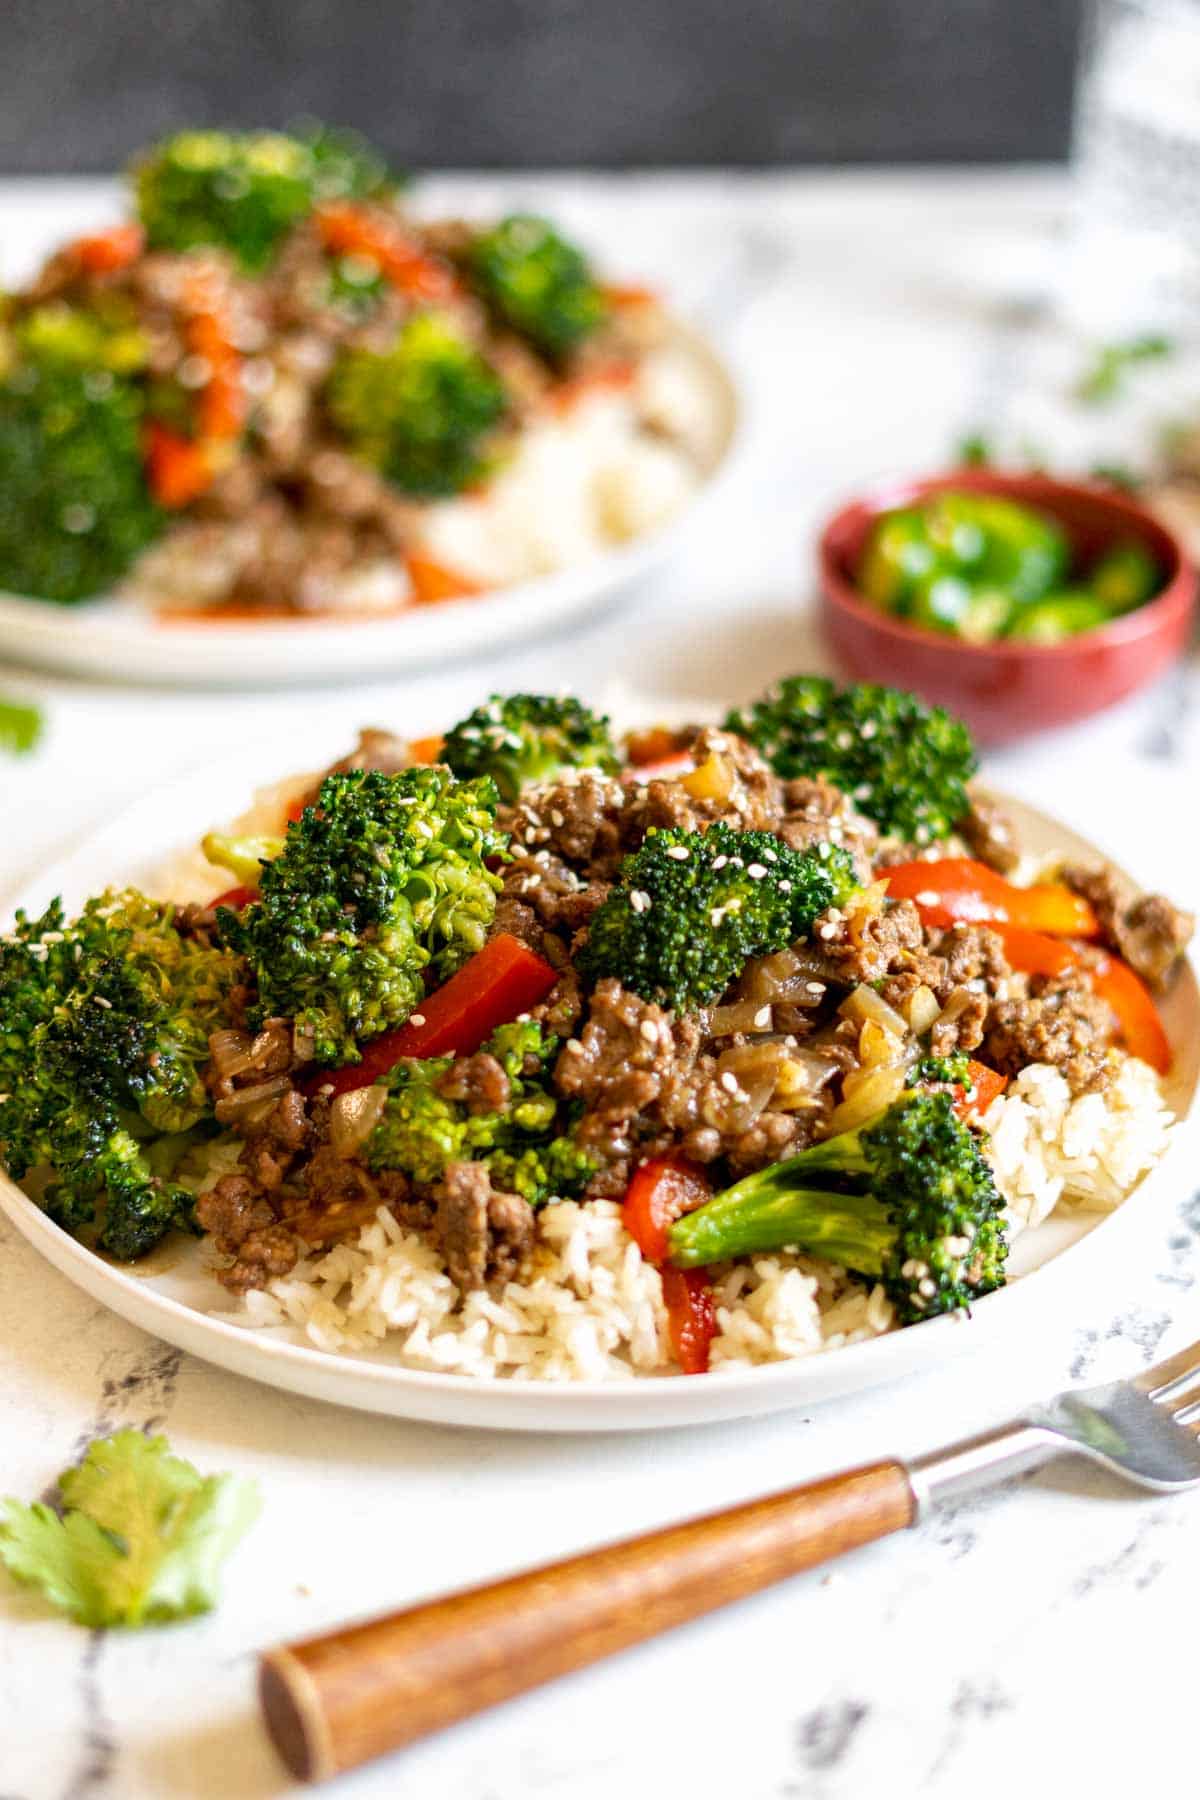 Beef and broccoli stir fry over rice.